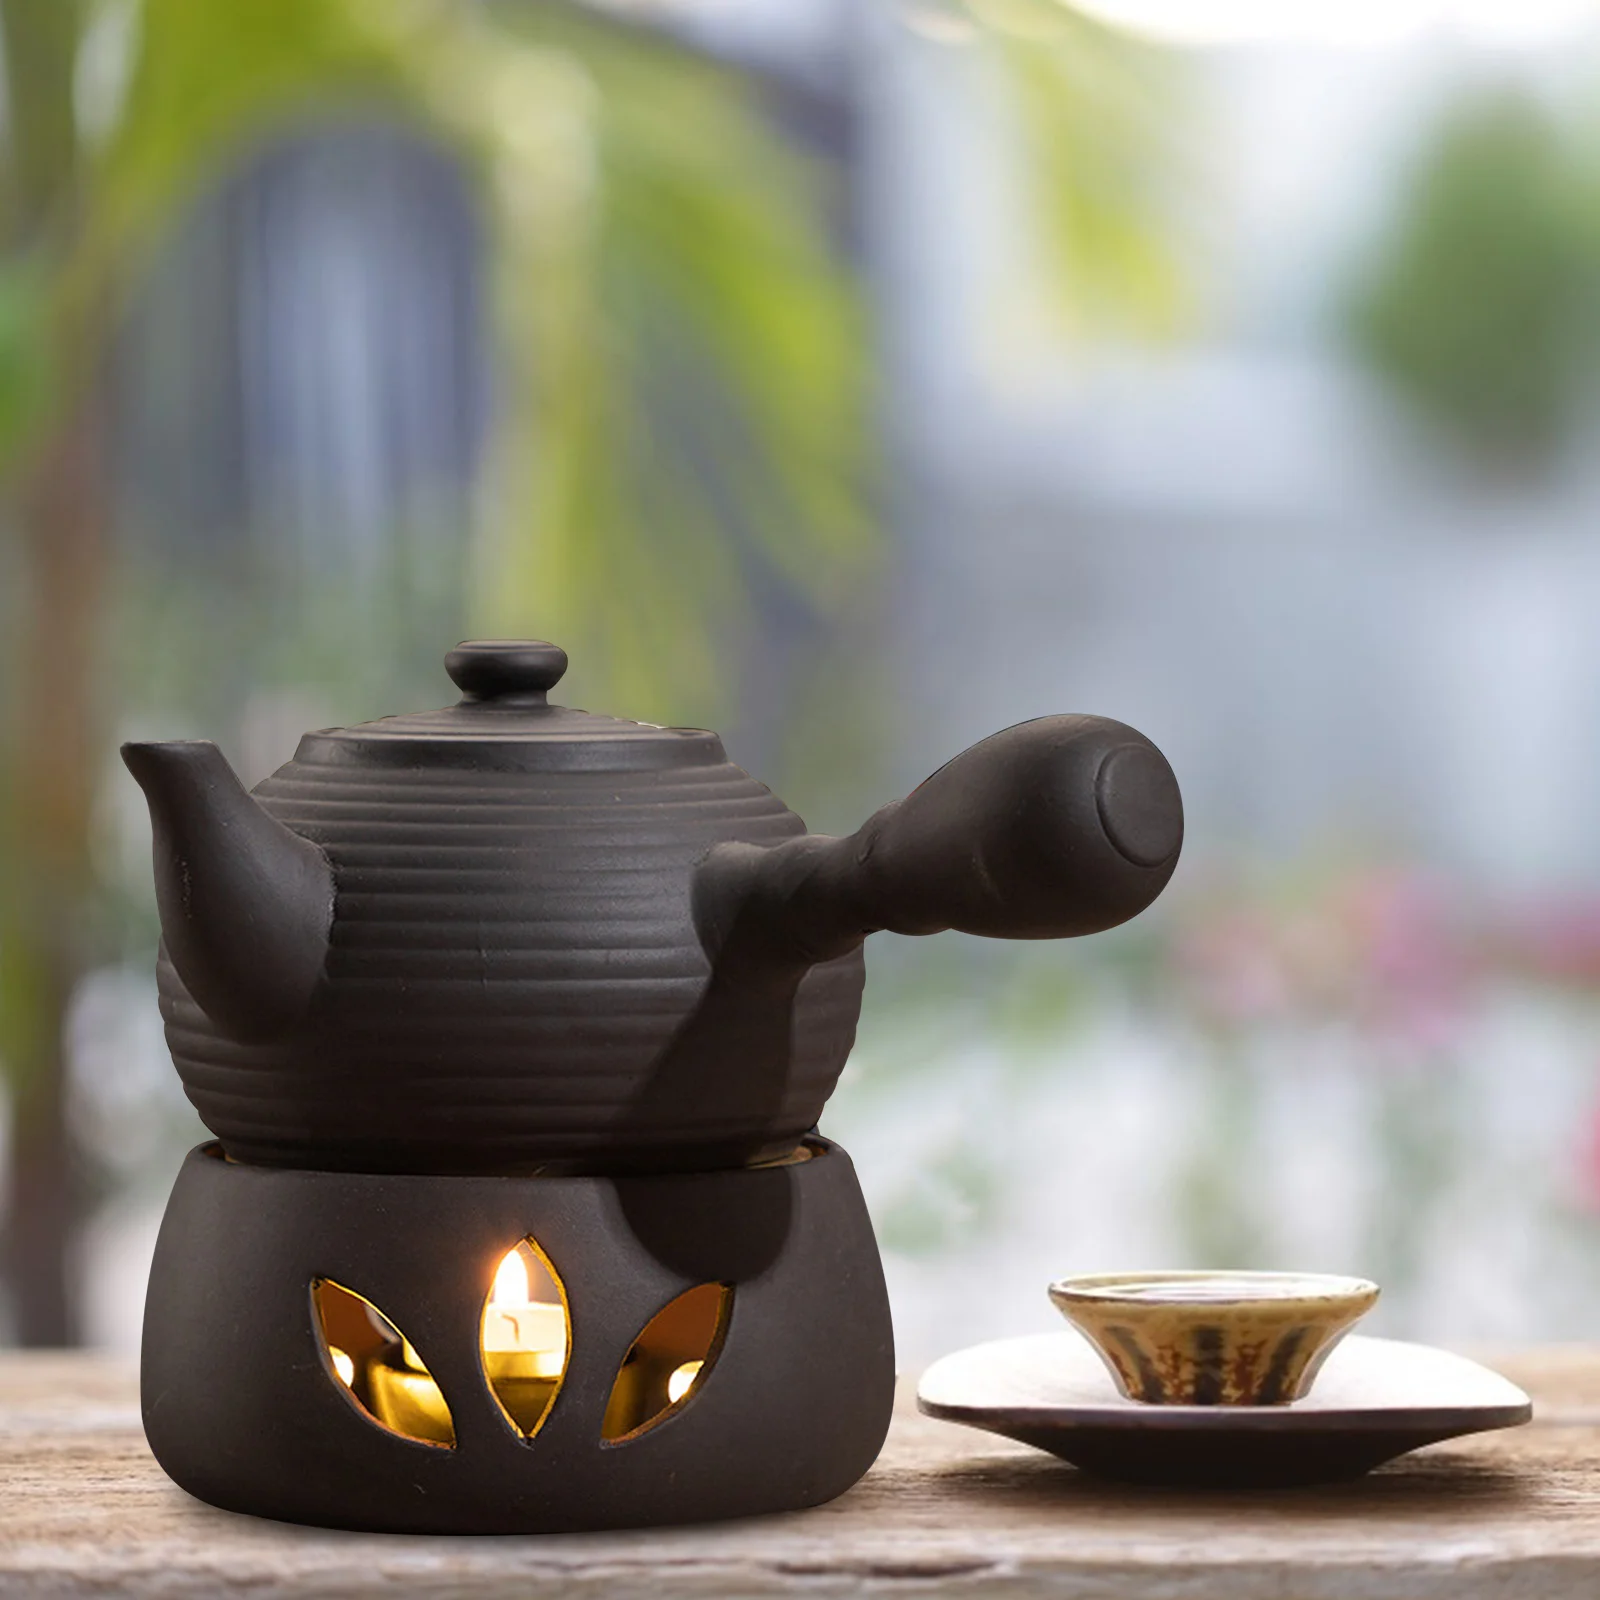 https://ae01.alicdn.com/kf/S724873ccc7764097b3cea398c9490386V/Black-Trim-Tea-Warmer-Stove-Home-Ceramic-Modern-Pot-Teapot-Insulation-Base-Multifunctional-Electric-Ceramics-Stand.jpg